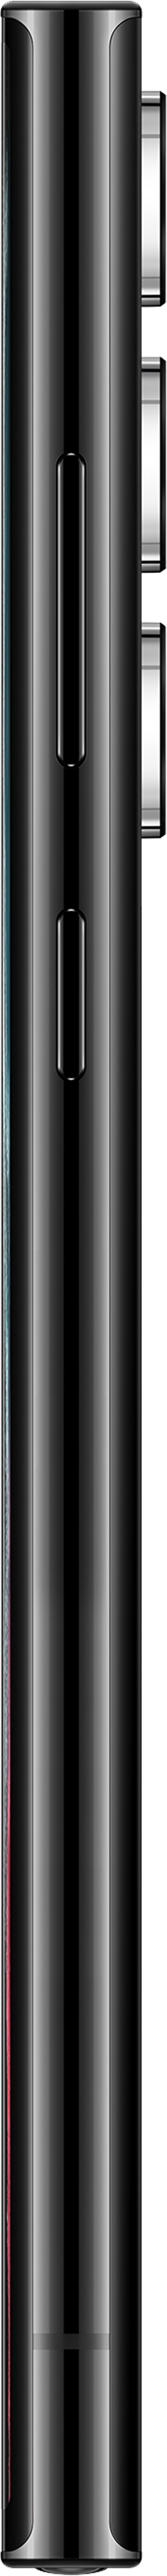 Samsung Galaxy S22 Ultra 256GB Dobbelt-SIM Fantomsvart